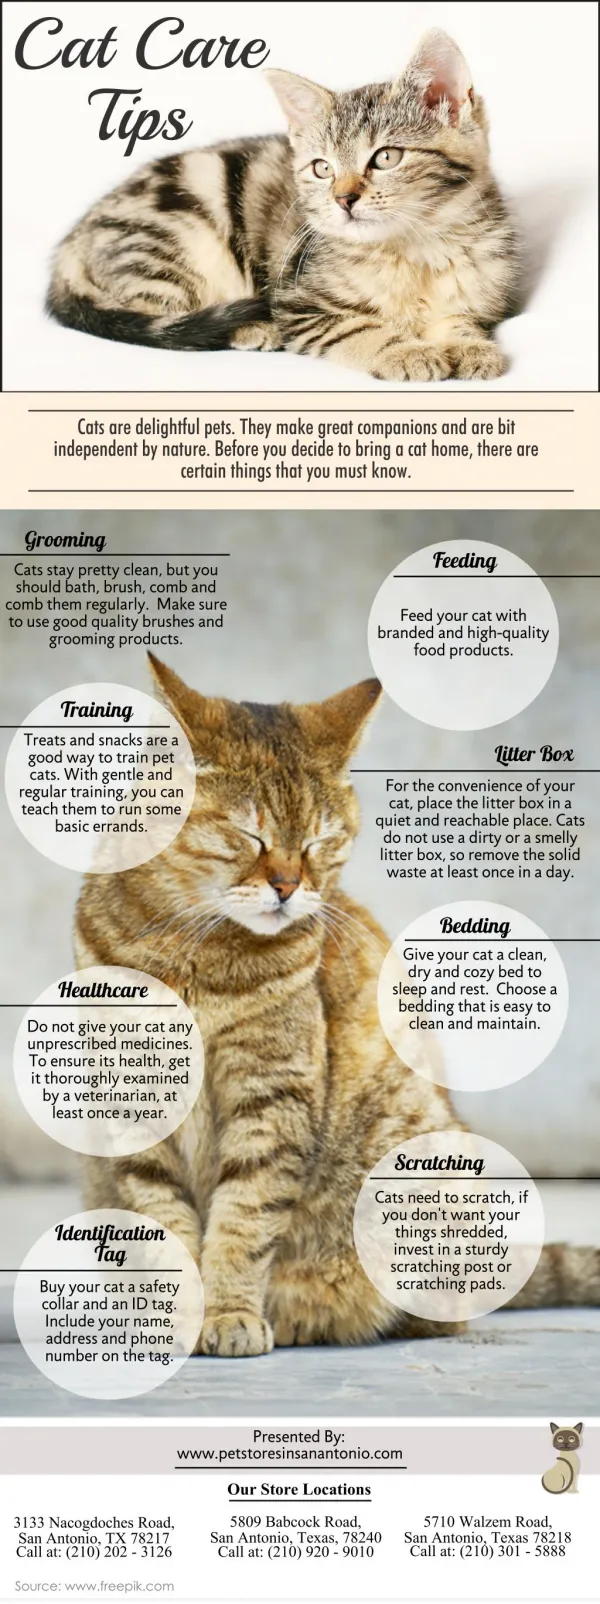 Cat Care Tips